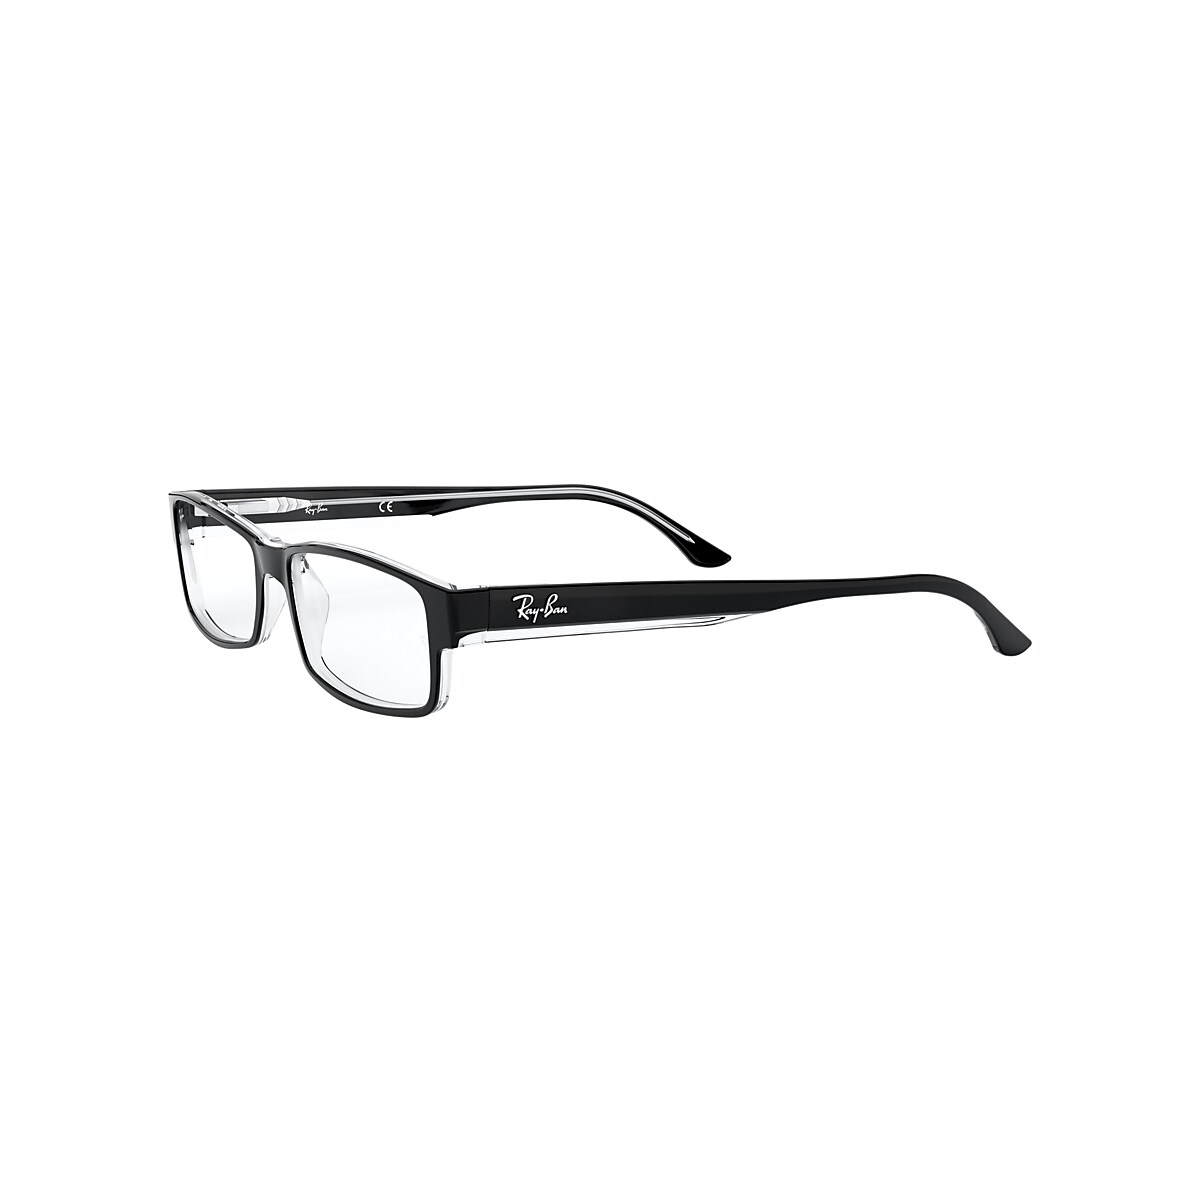 Christchurch Afleiden chrysant Rb5114 Optics Eyeglasses with Black On Transparent Frame | Ray-Ban®